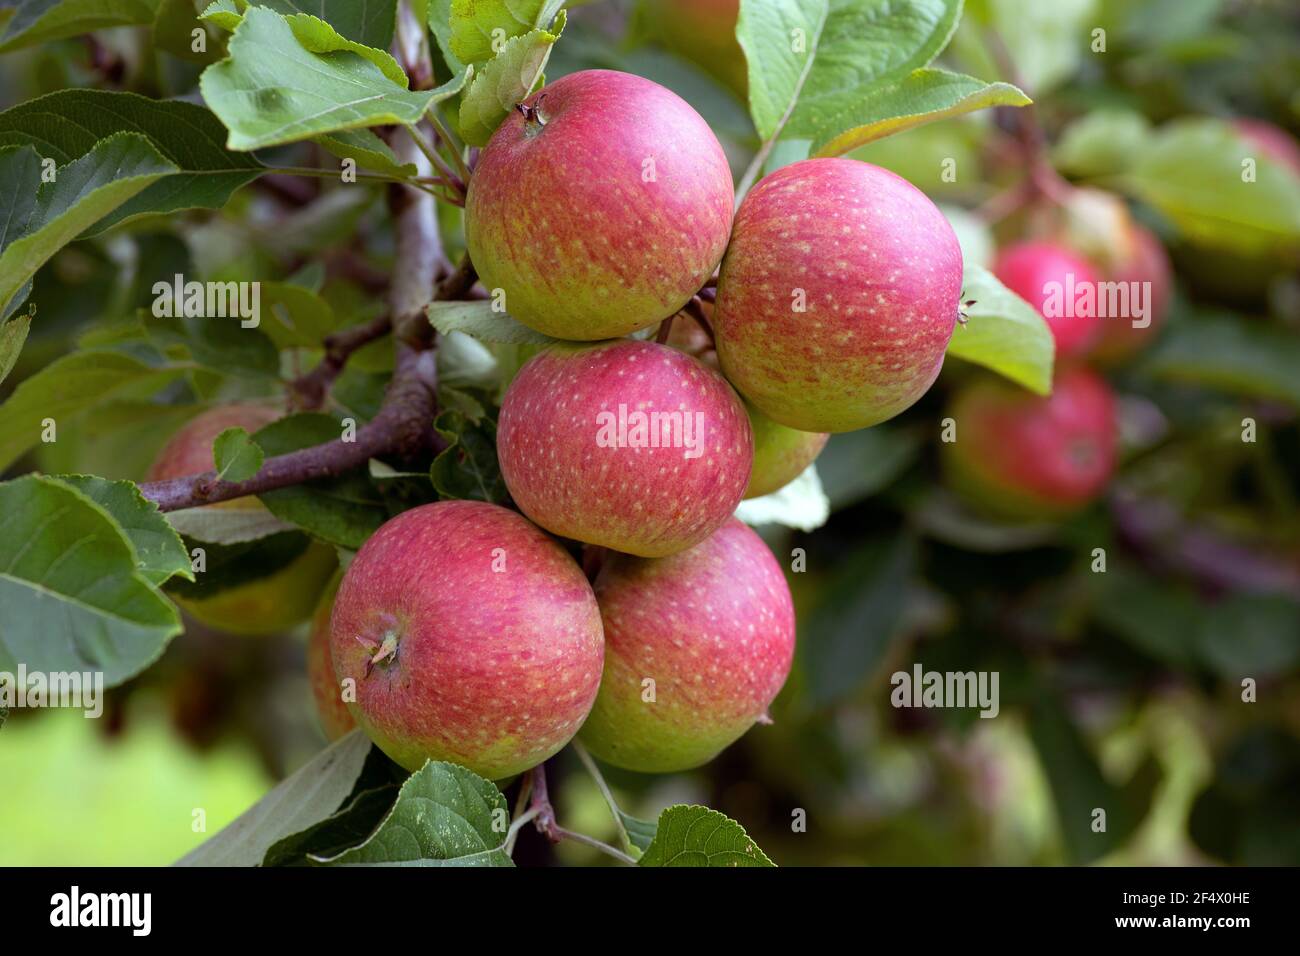 Apples on apple tree Stock Photo